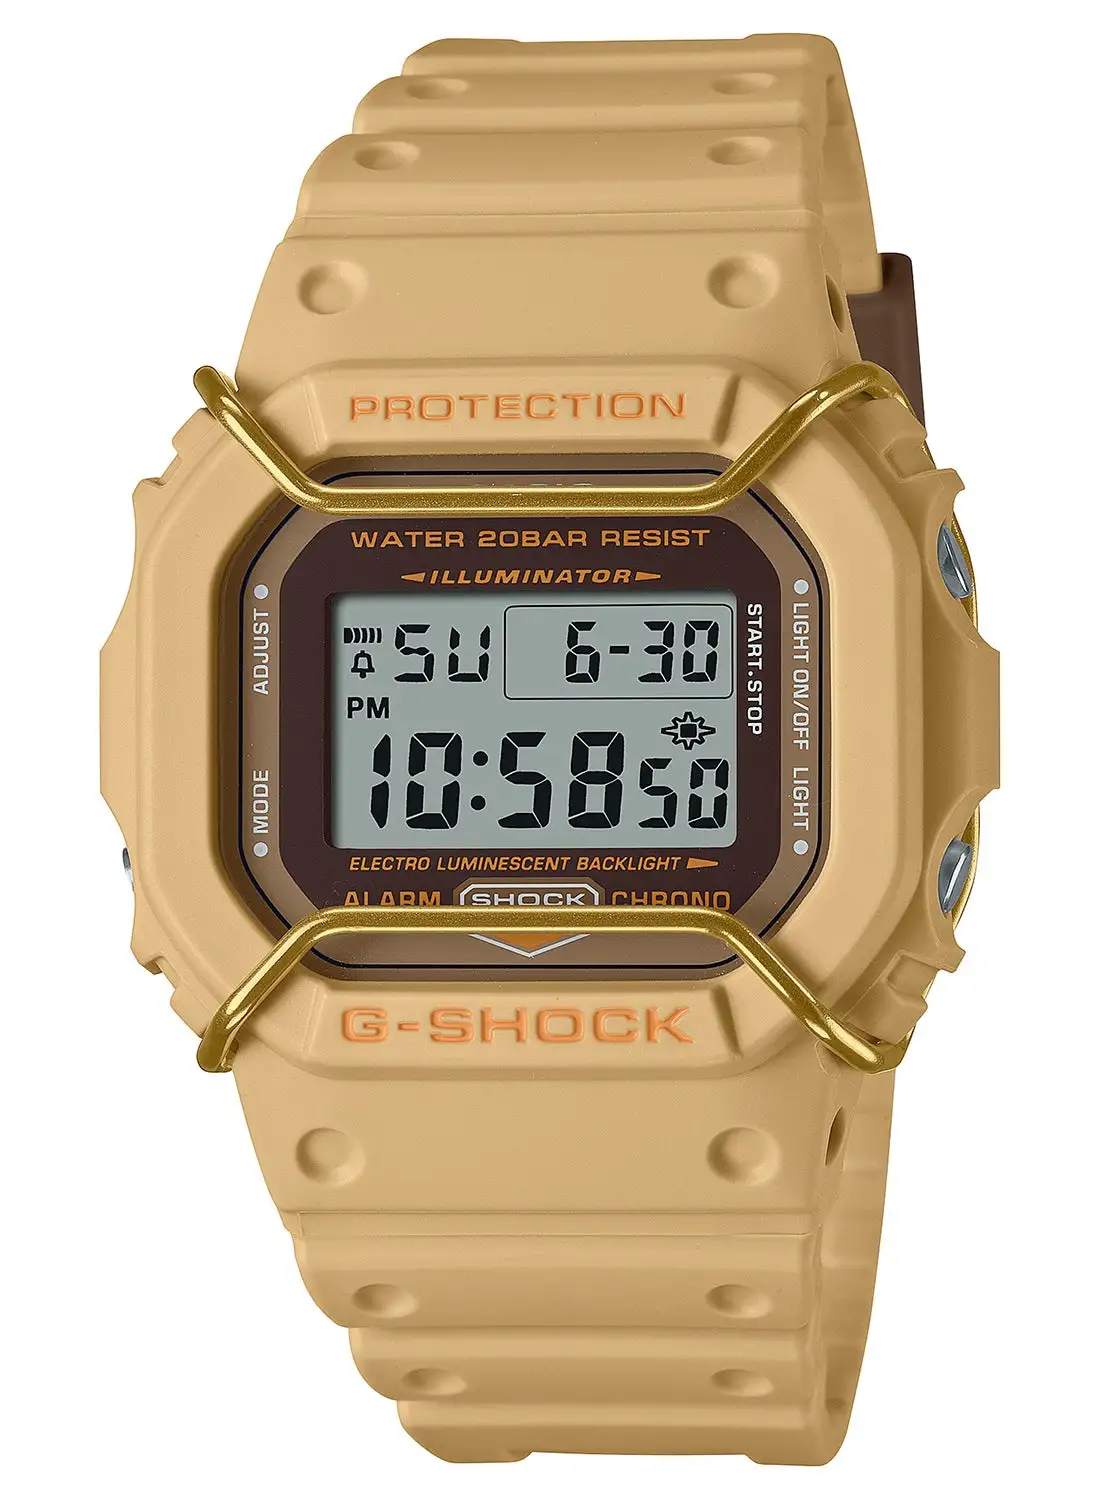 جي شوك ساعة يد رجالية رقمية راتينج DW-5600PT-5DR - 40 ملم